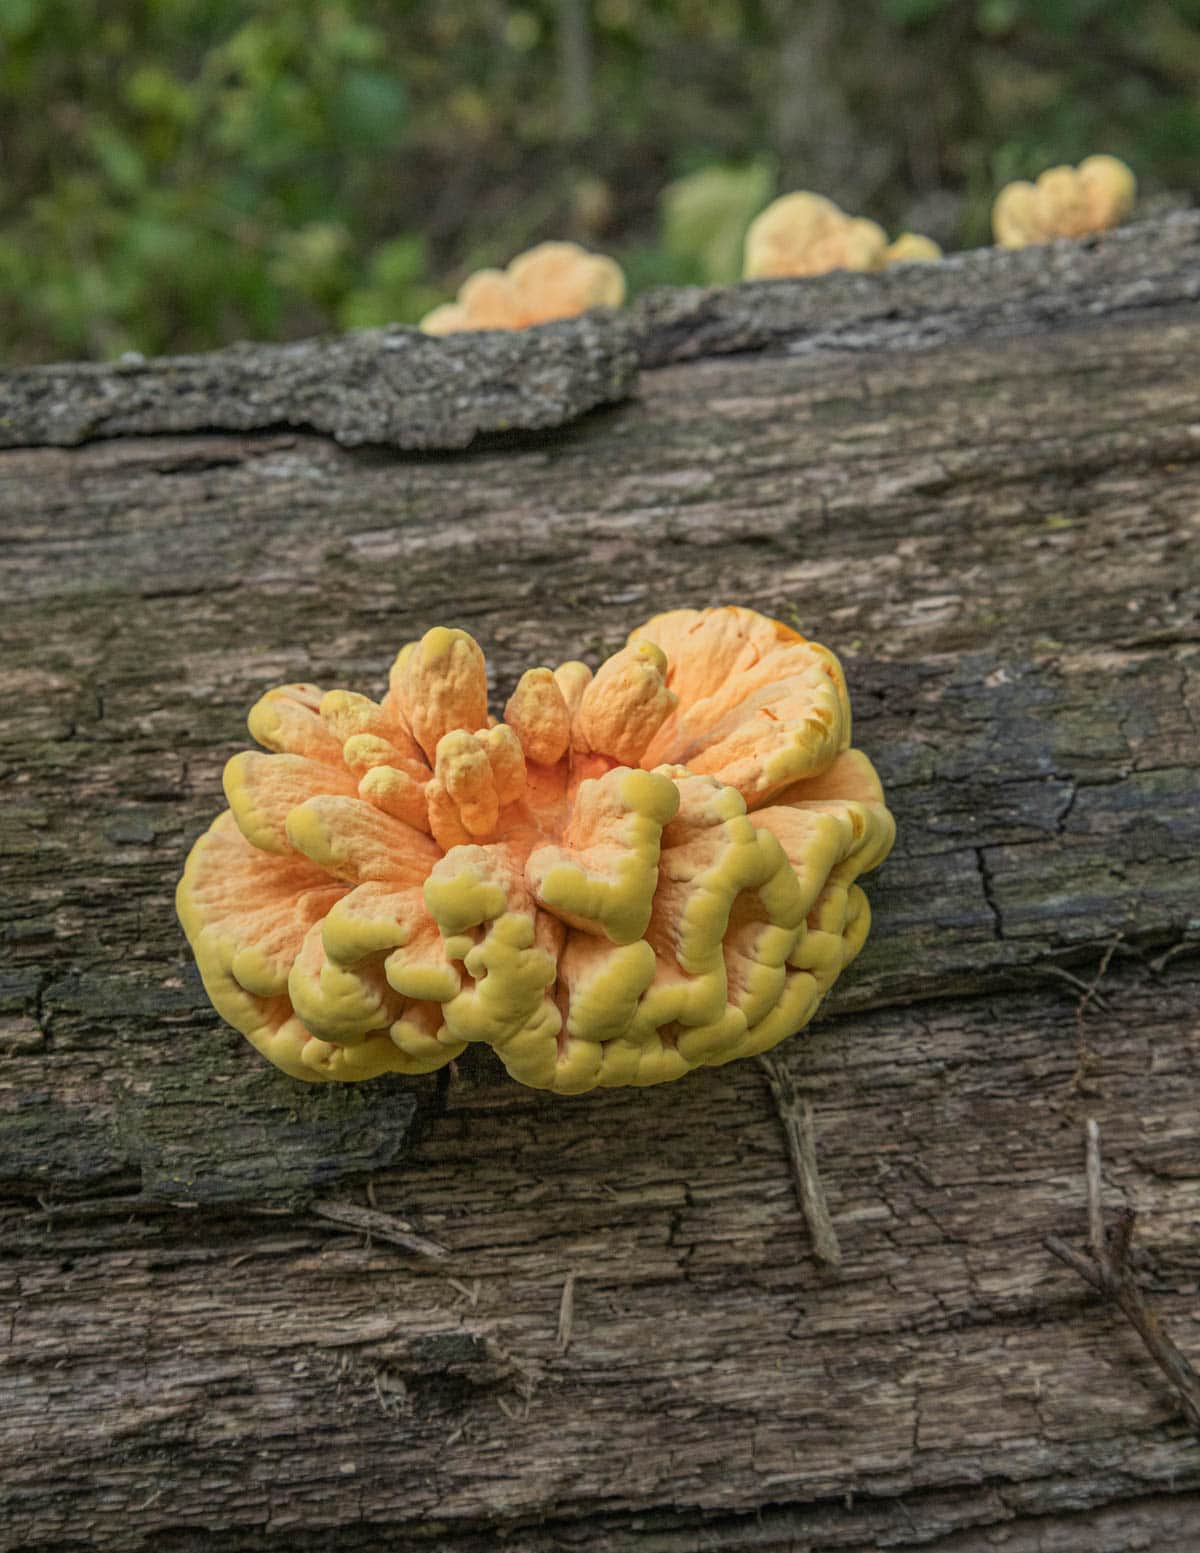 Wild sulphur shelf or chicken of the woods mushrooms (Laetiporus sulphureus) growing on an oak log. 